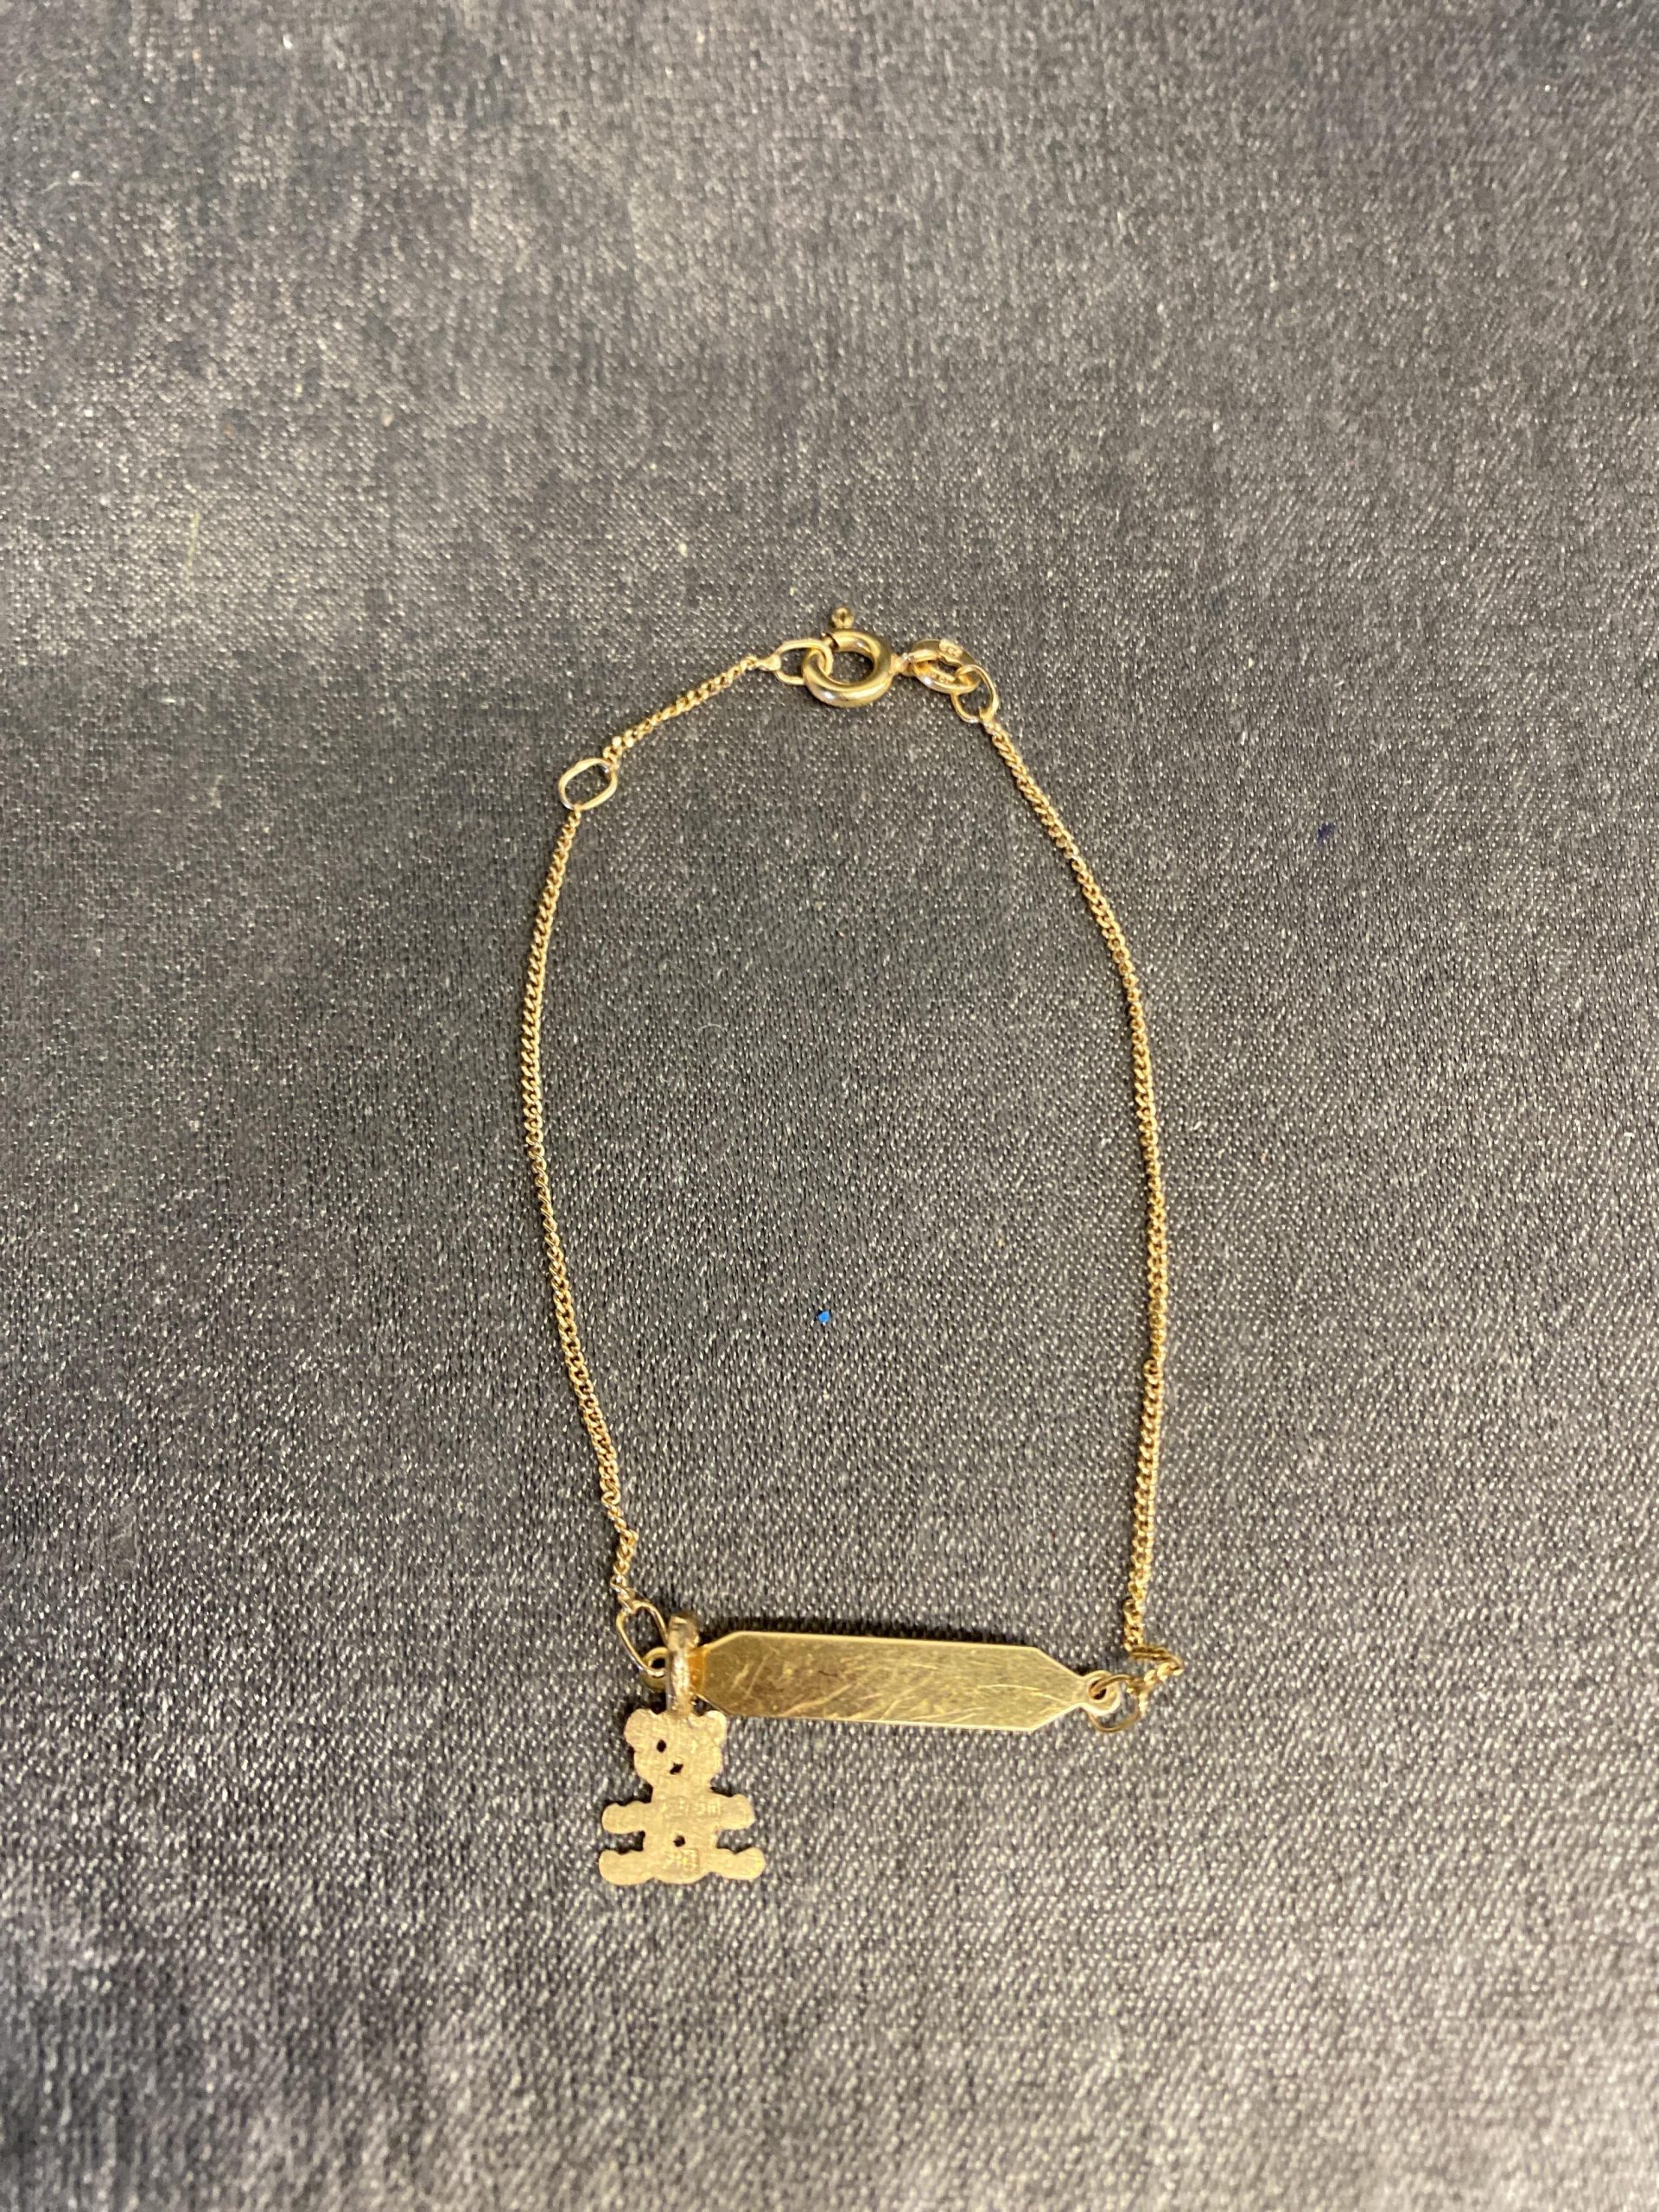 10K Gold Child’s Bracelet With Charm